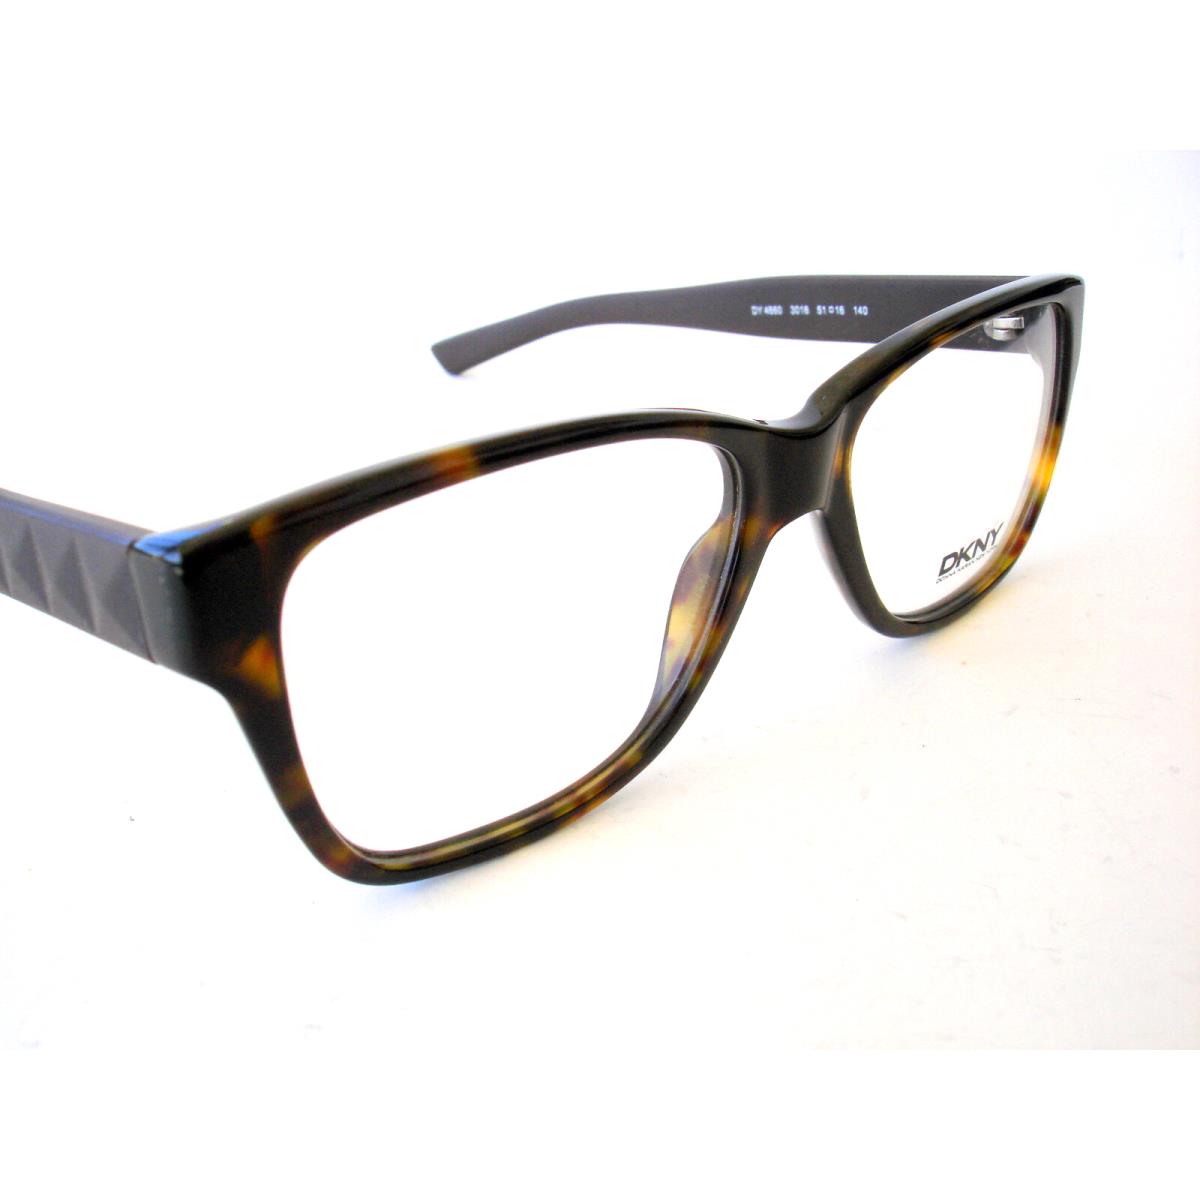 DKNY eyeglasses  - Frame: Brown 2